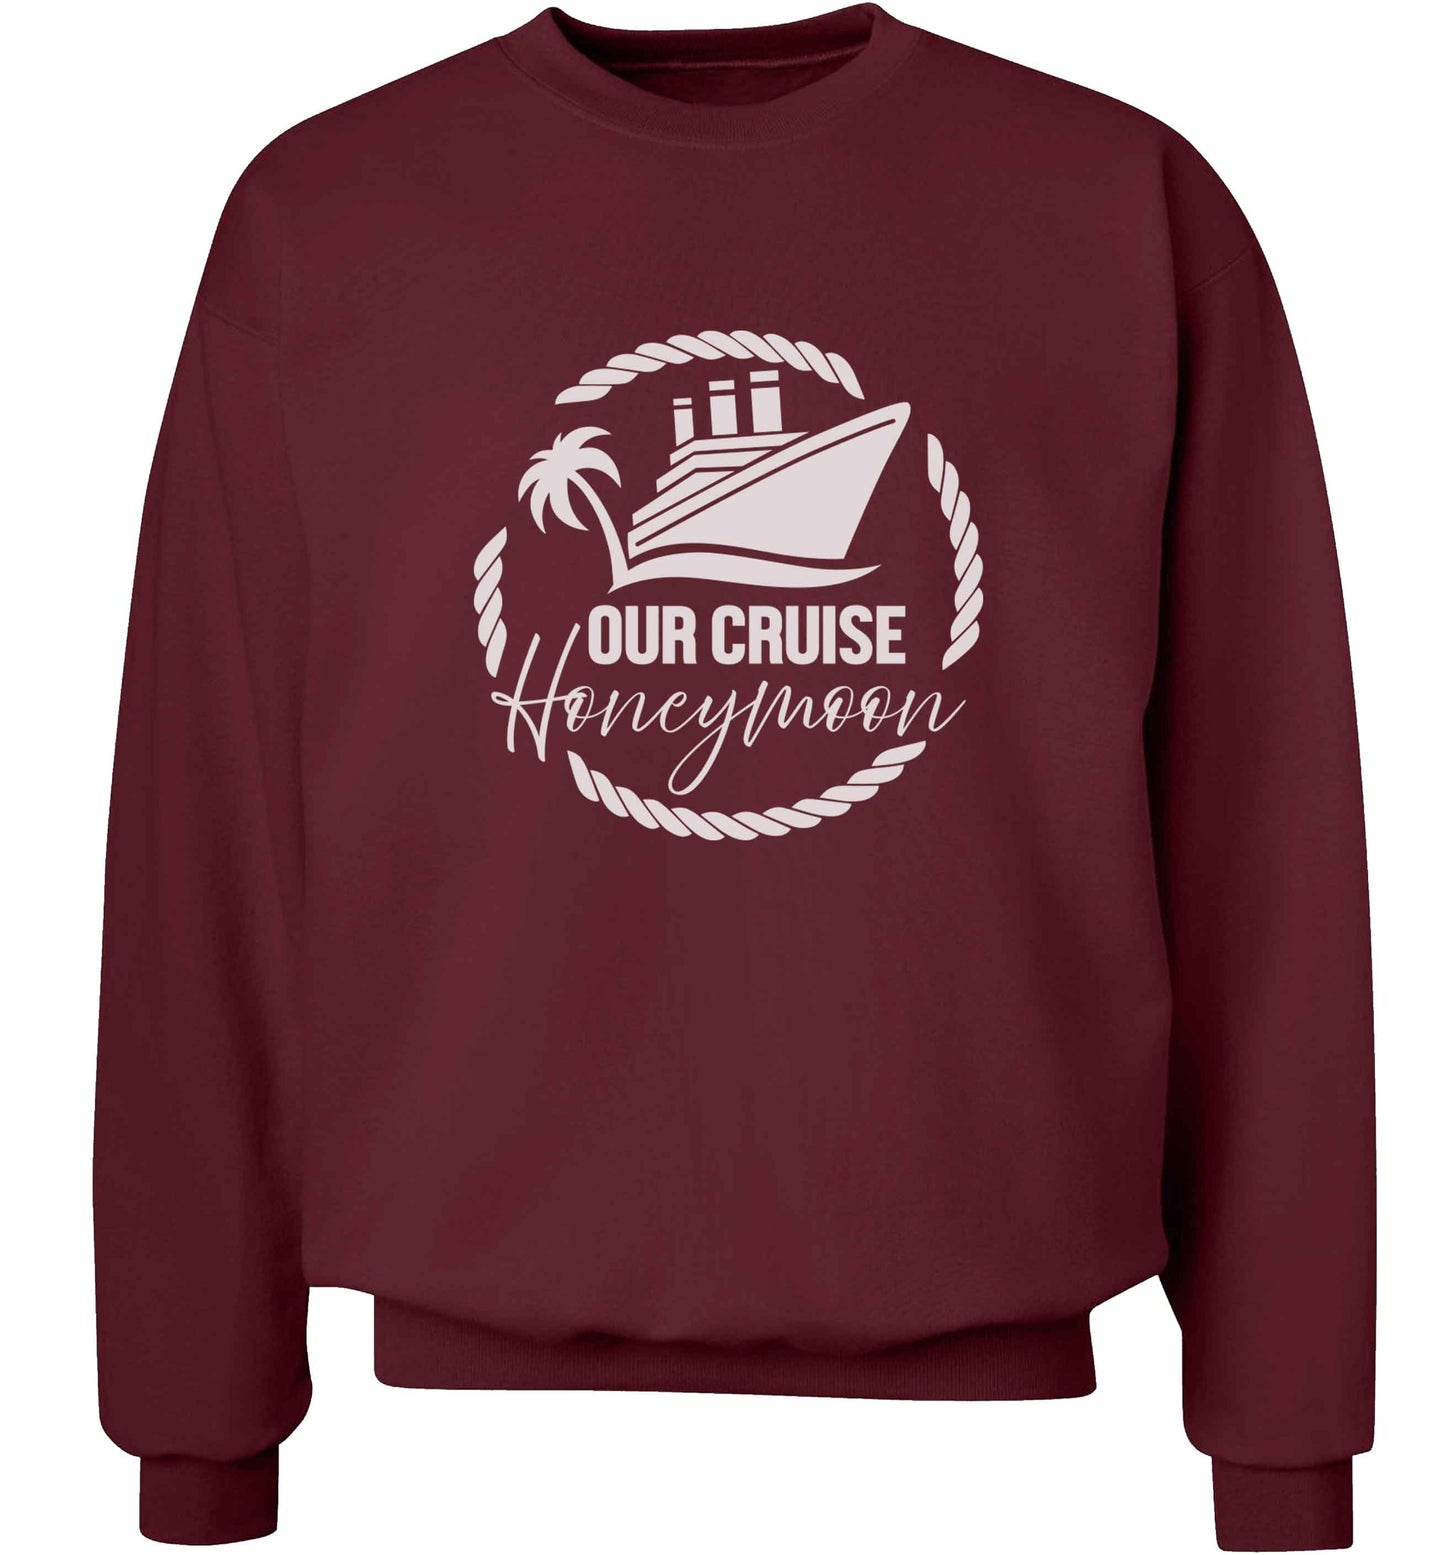 Our cruise honeymoon adult's unisex maroon sweater 2XL